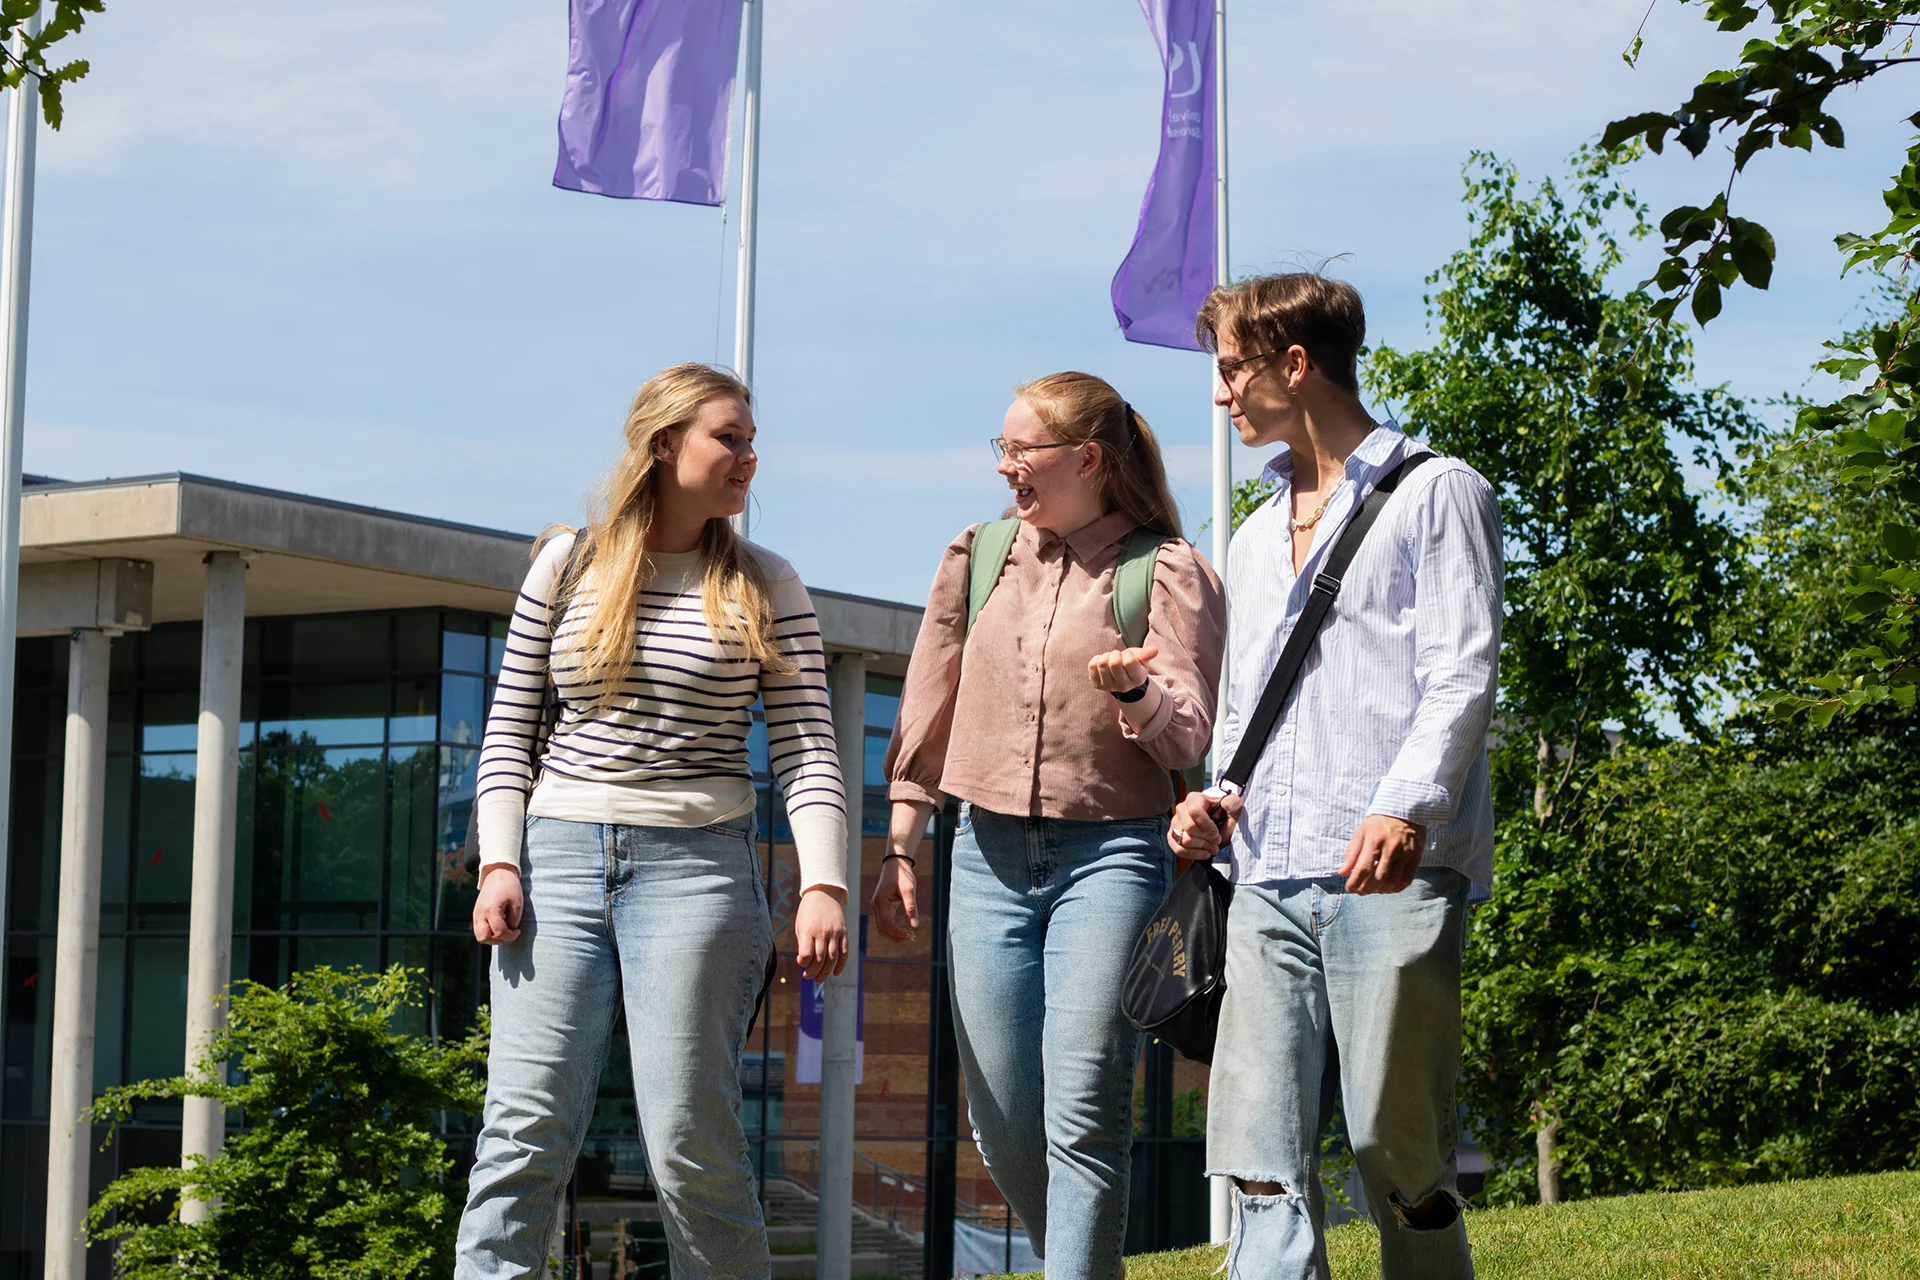 Students campus Vestfold